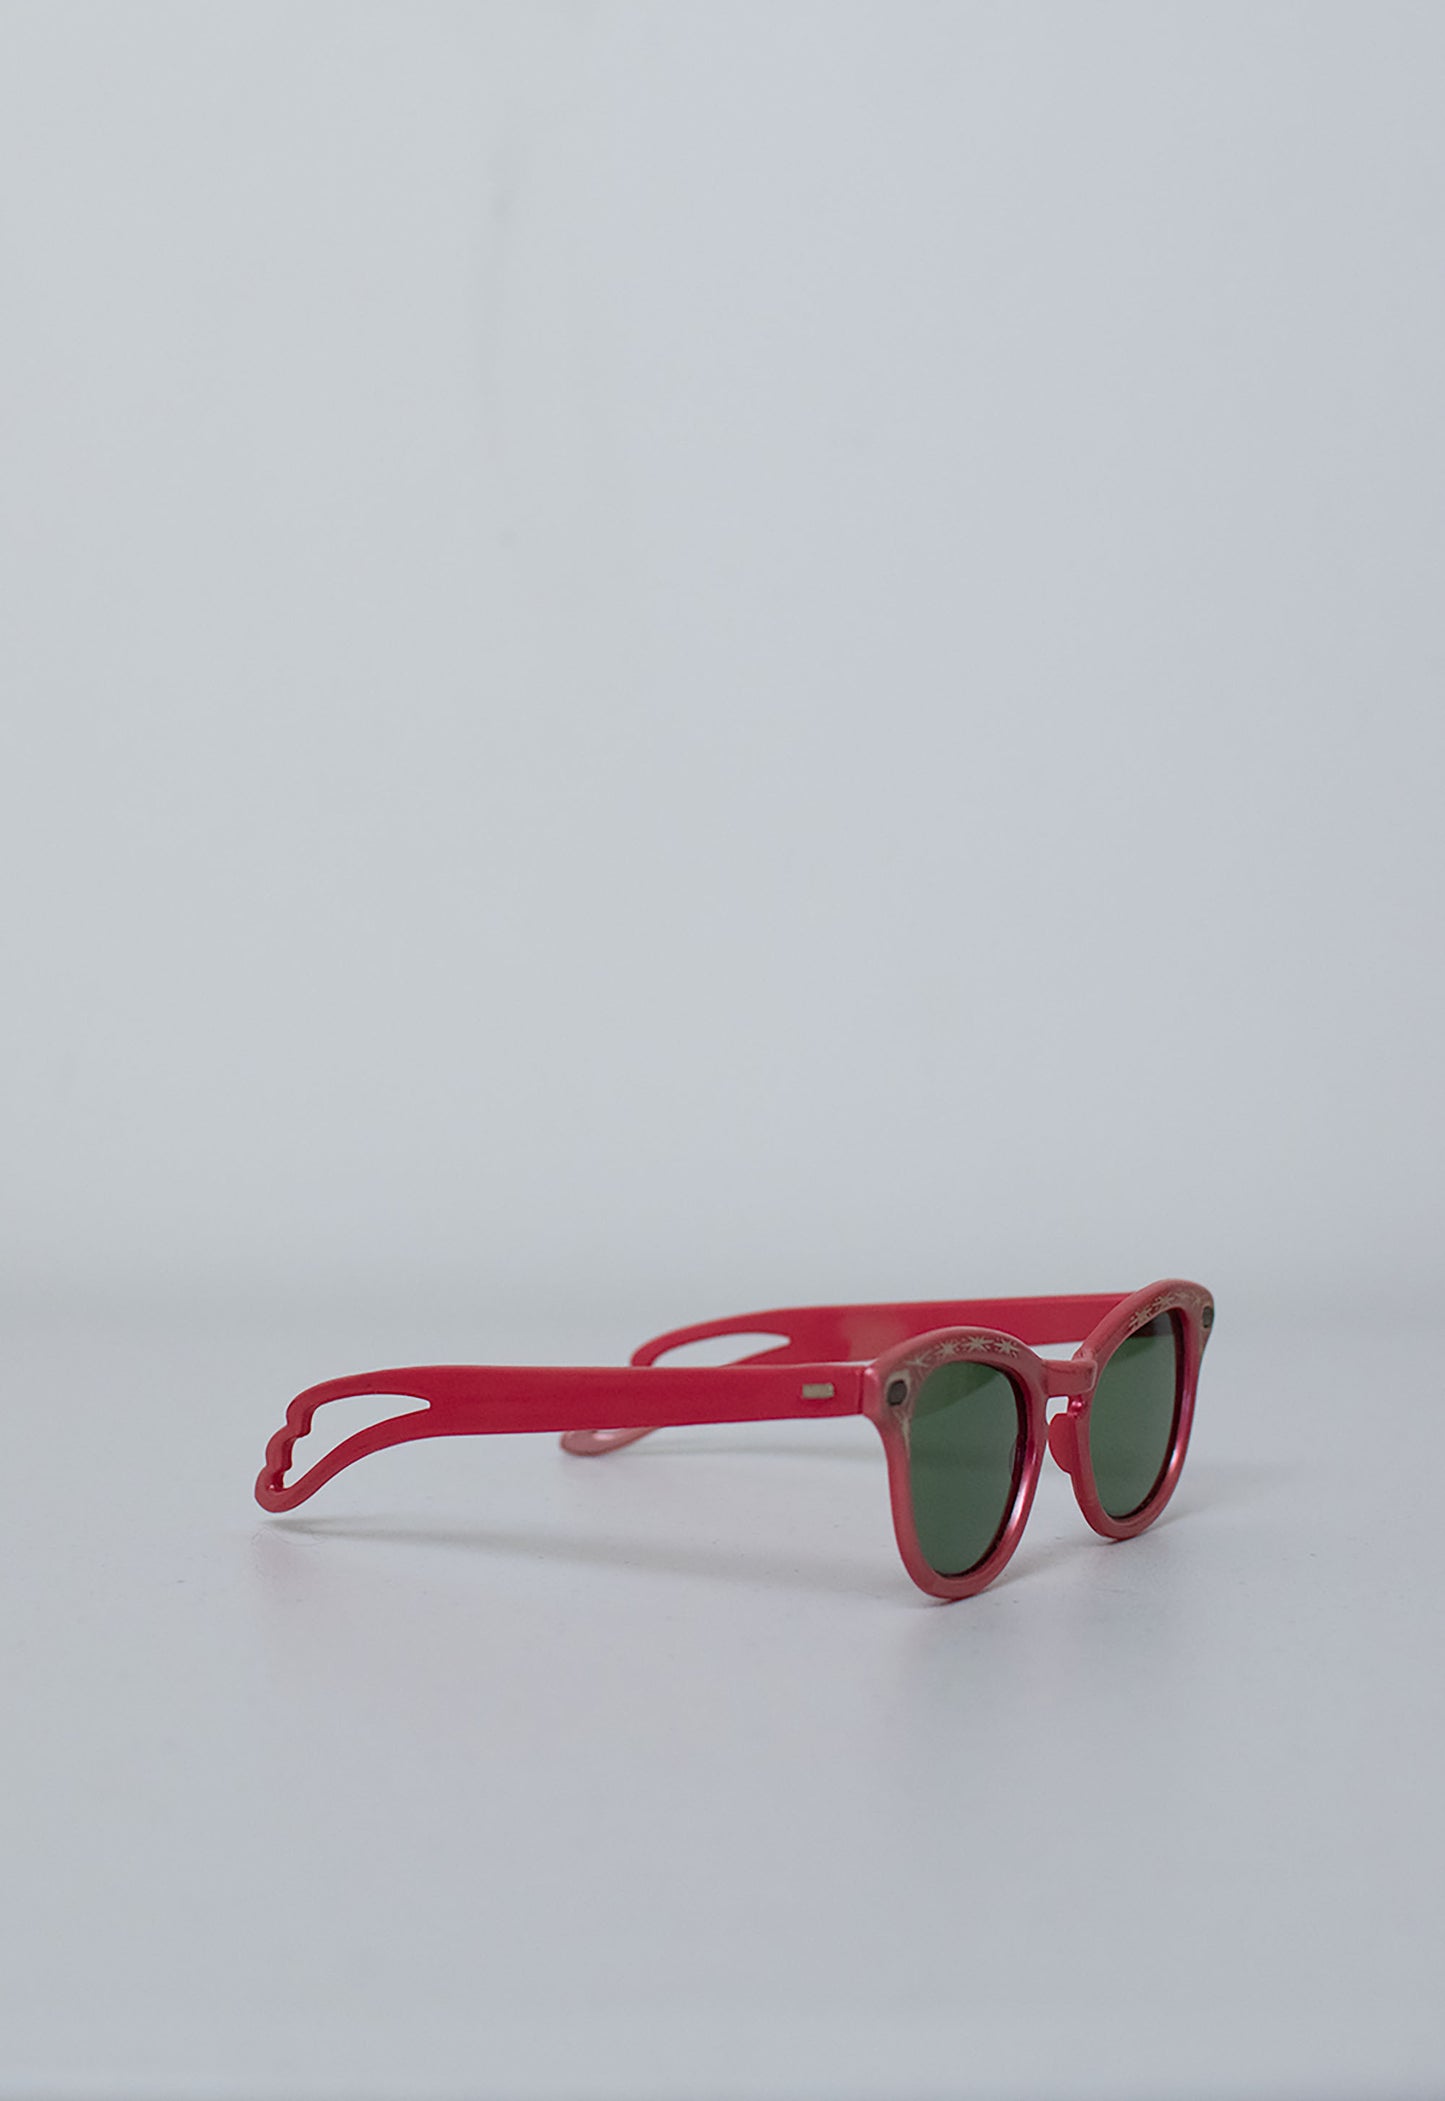 1950s Sunglasses | Dusty Rose